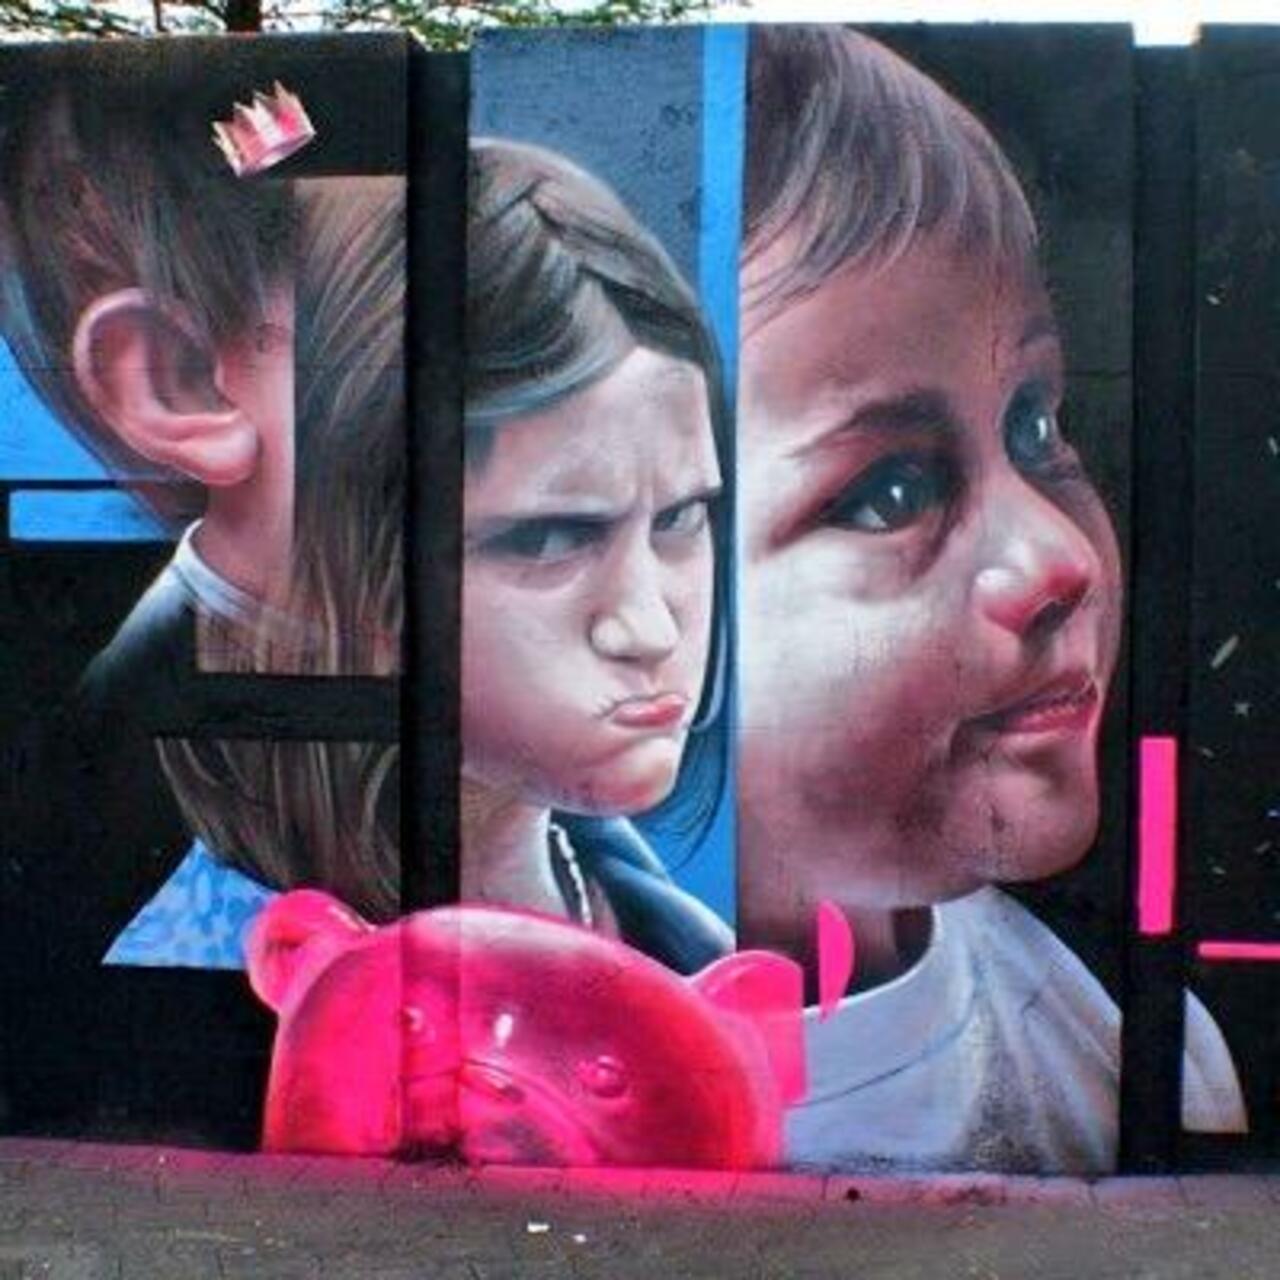 Telmo Miel /"Gummy bear selfie"
Eindhoven

#streetart #art #graffiti #mural http://t.co/HhHzBEeB2k